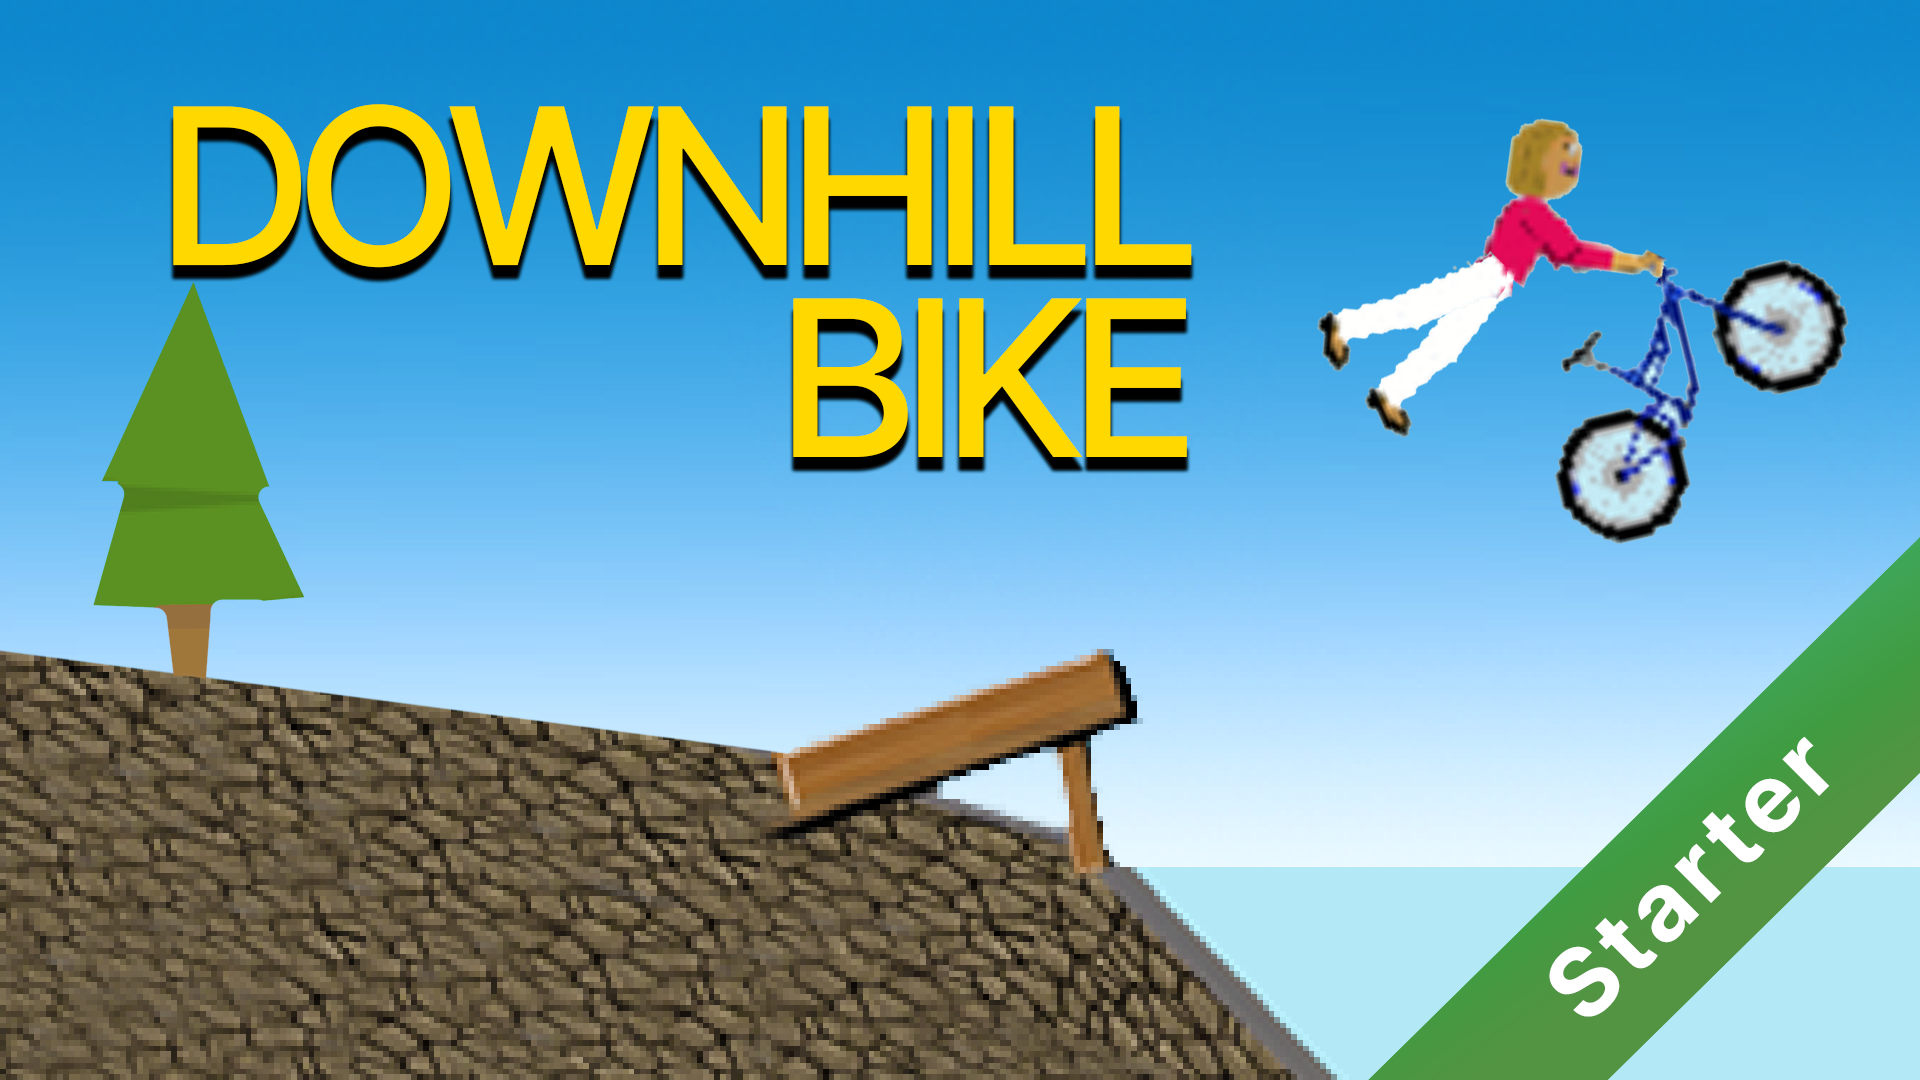 Downhill bike physics demo